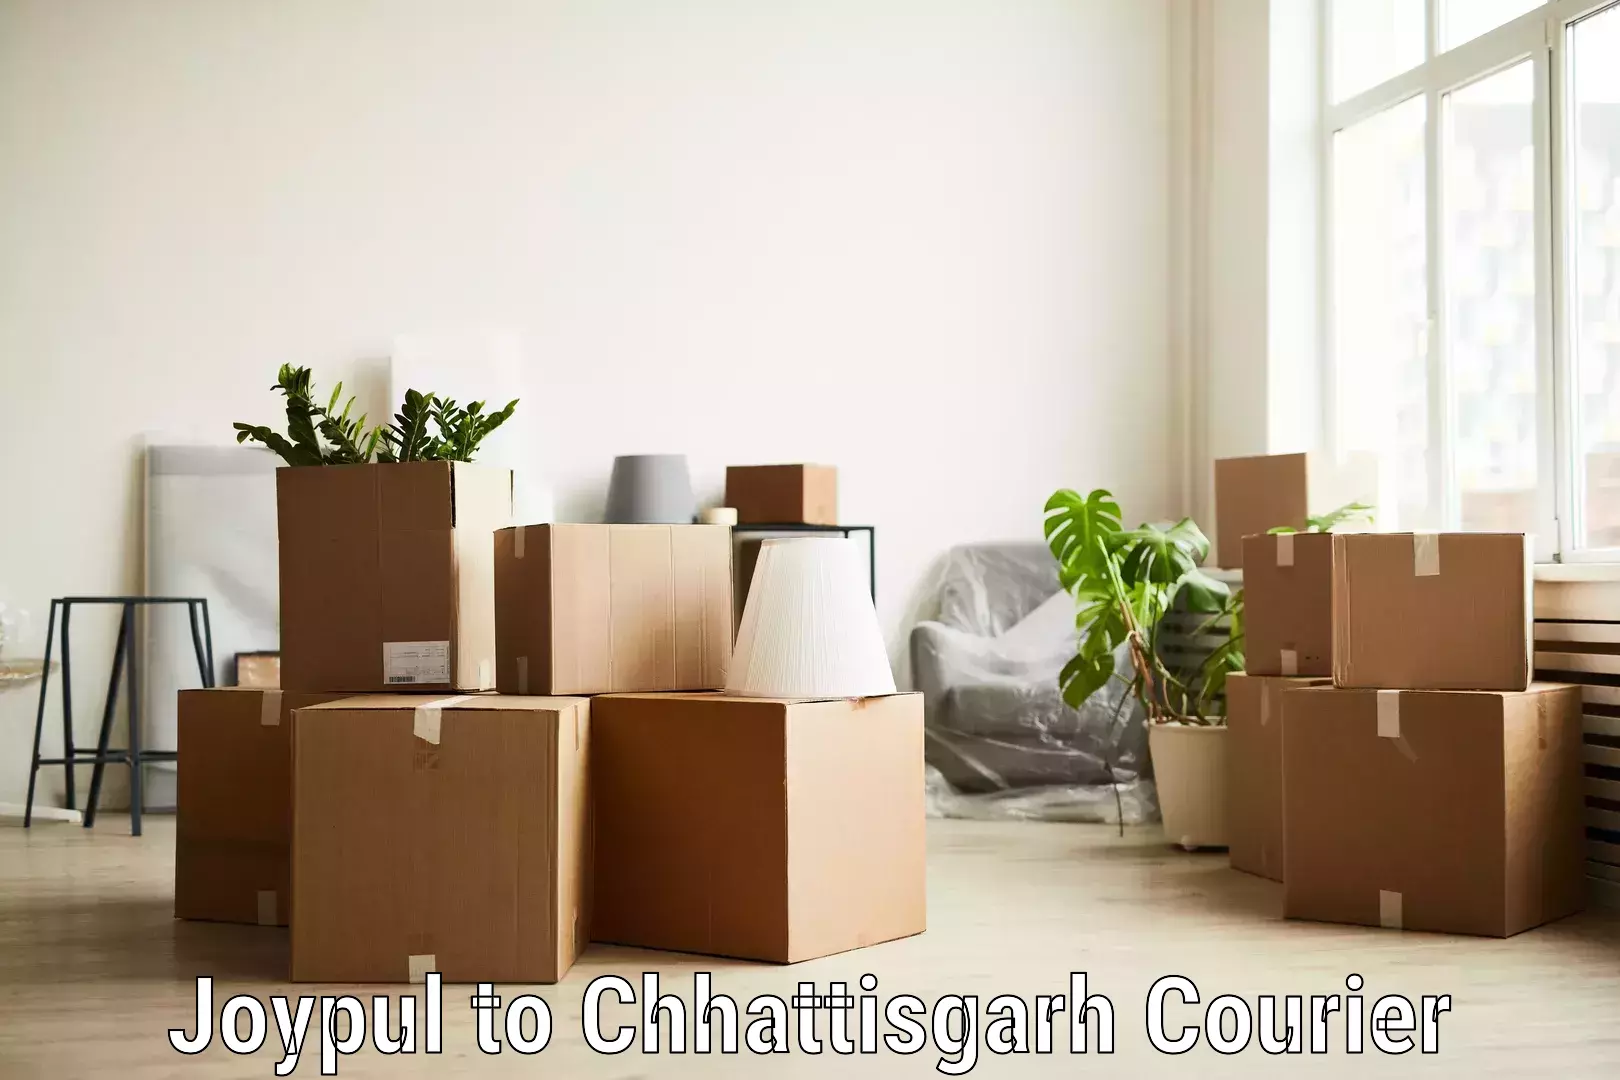 Nationwide parcel services Joypul to Chhattisgarh